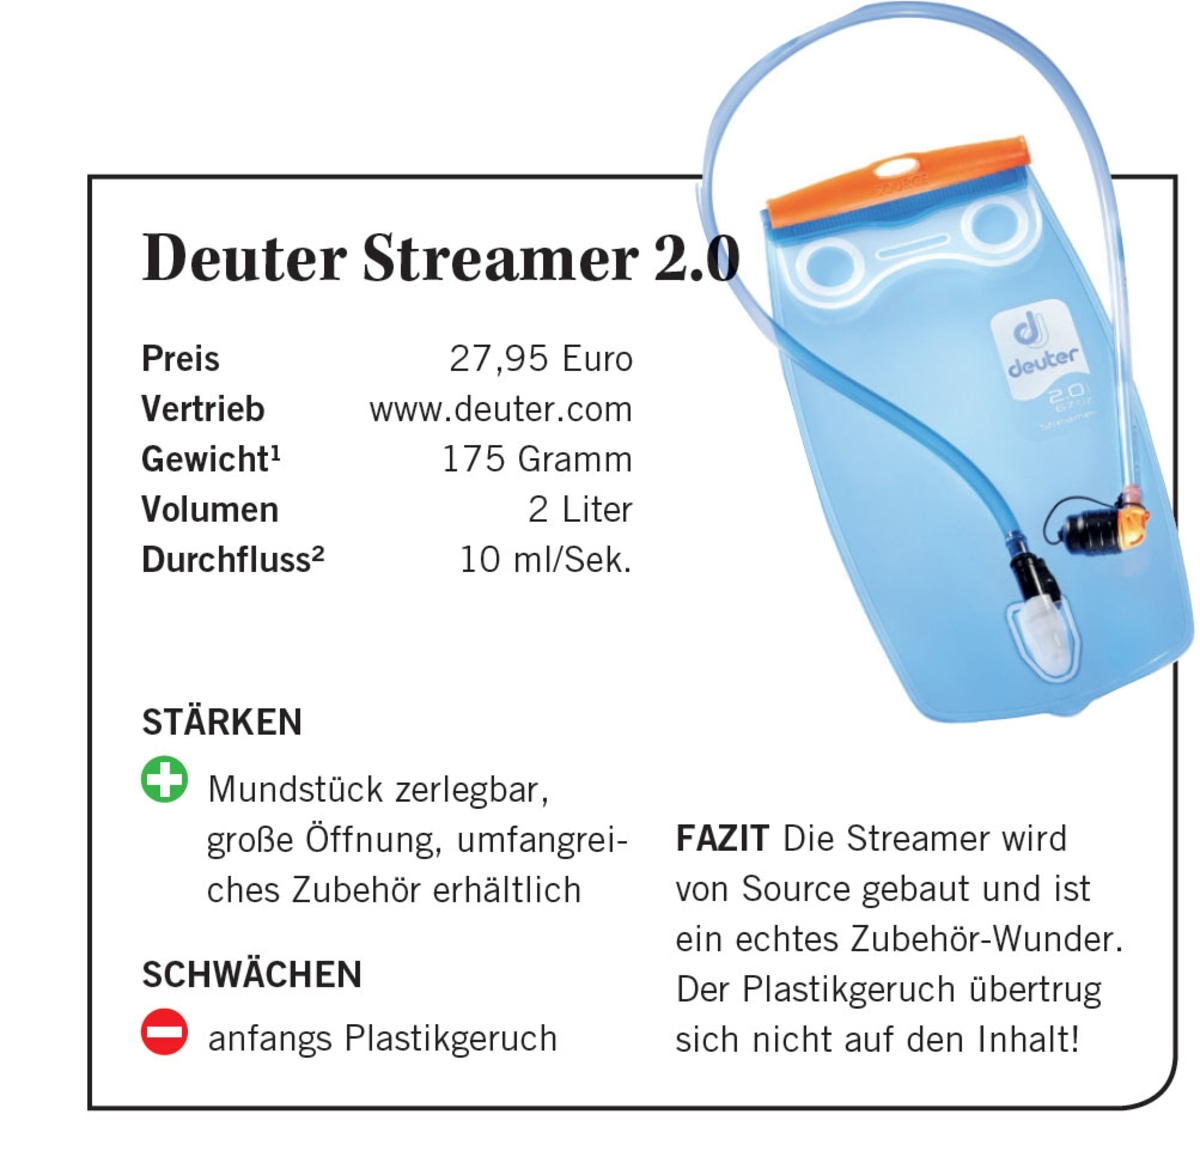 Deuter Streamer 2.0